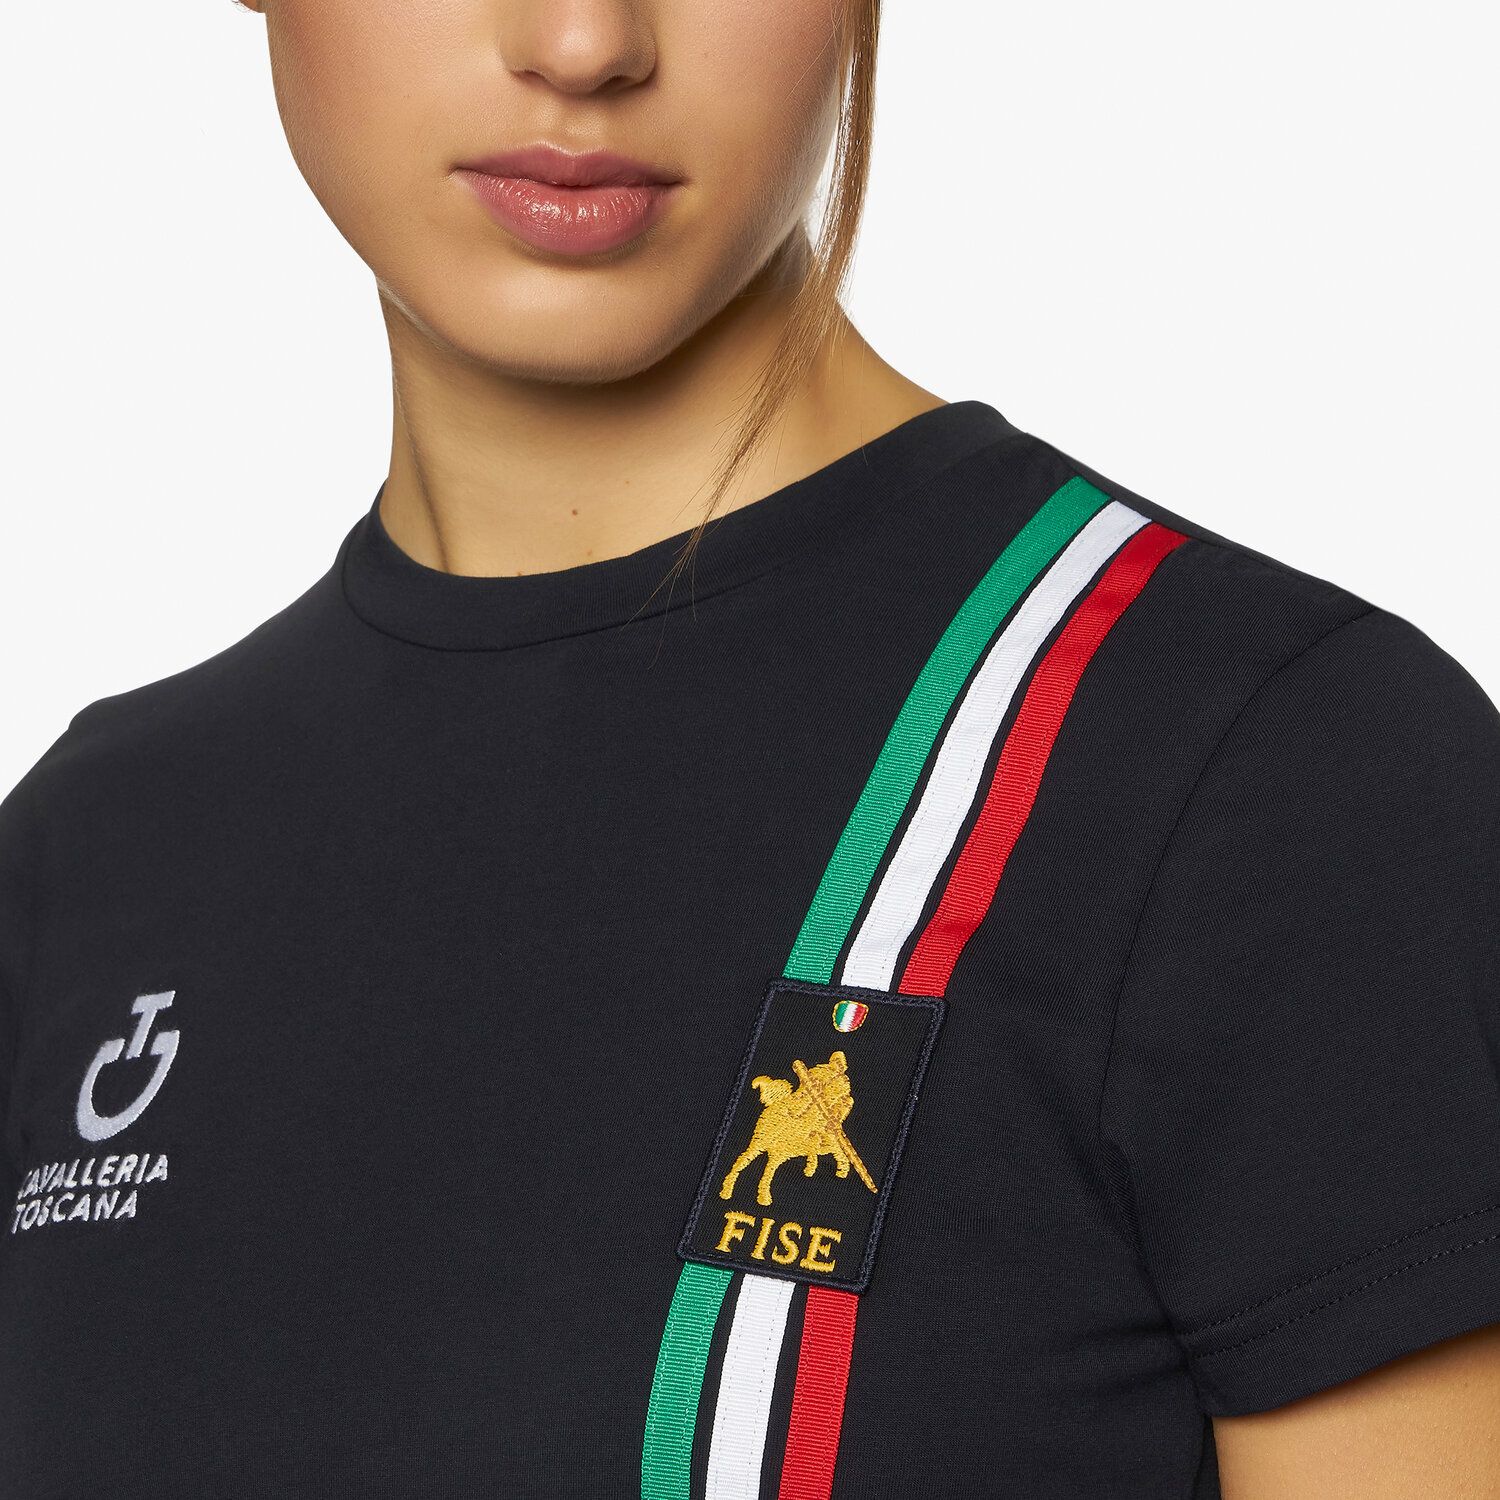 Cavalleria Toscana Women's FISE short sleeved t-shirt NAVY-4